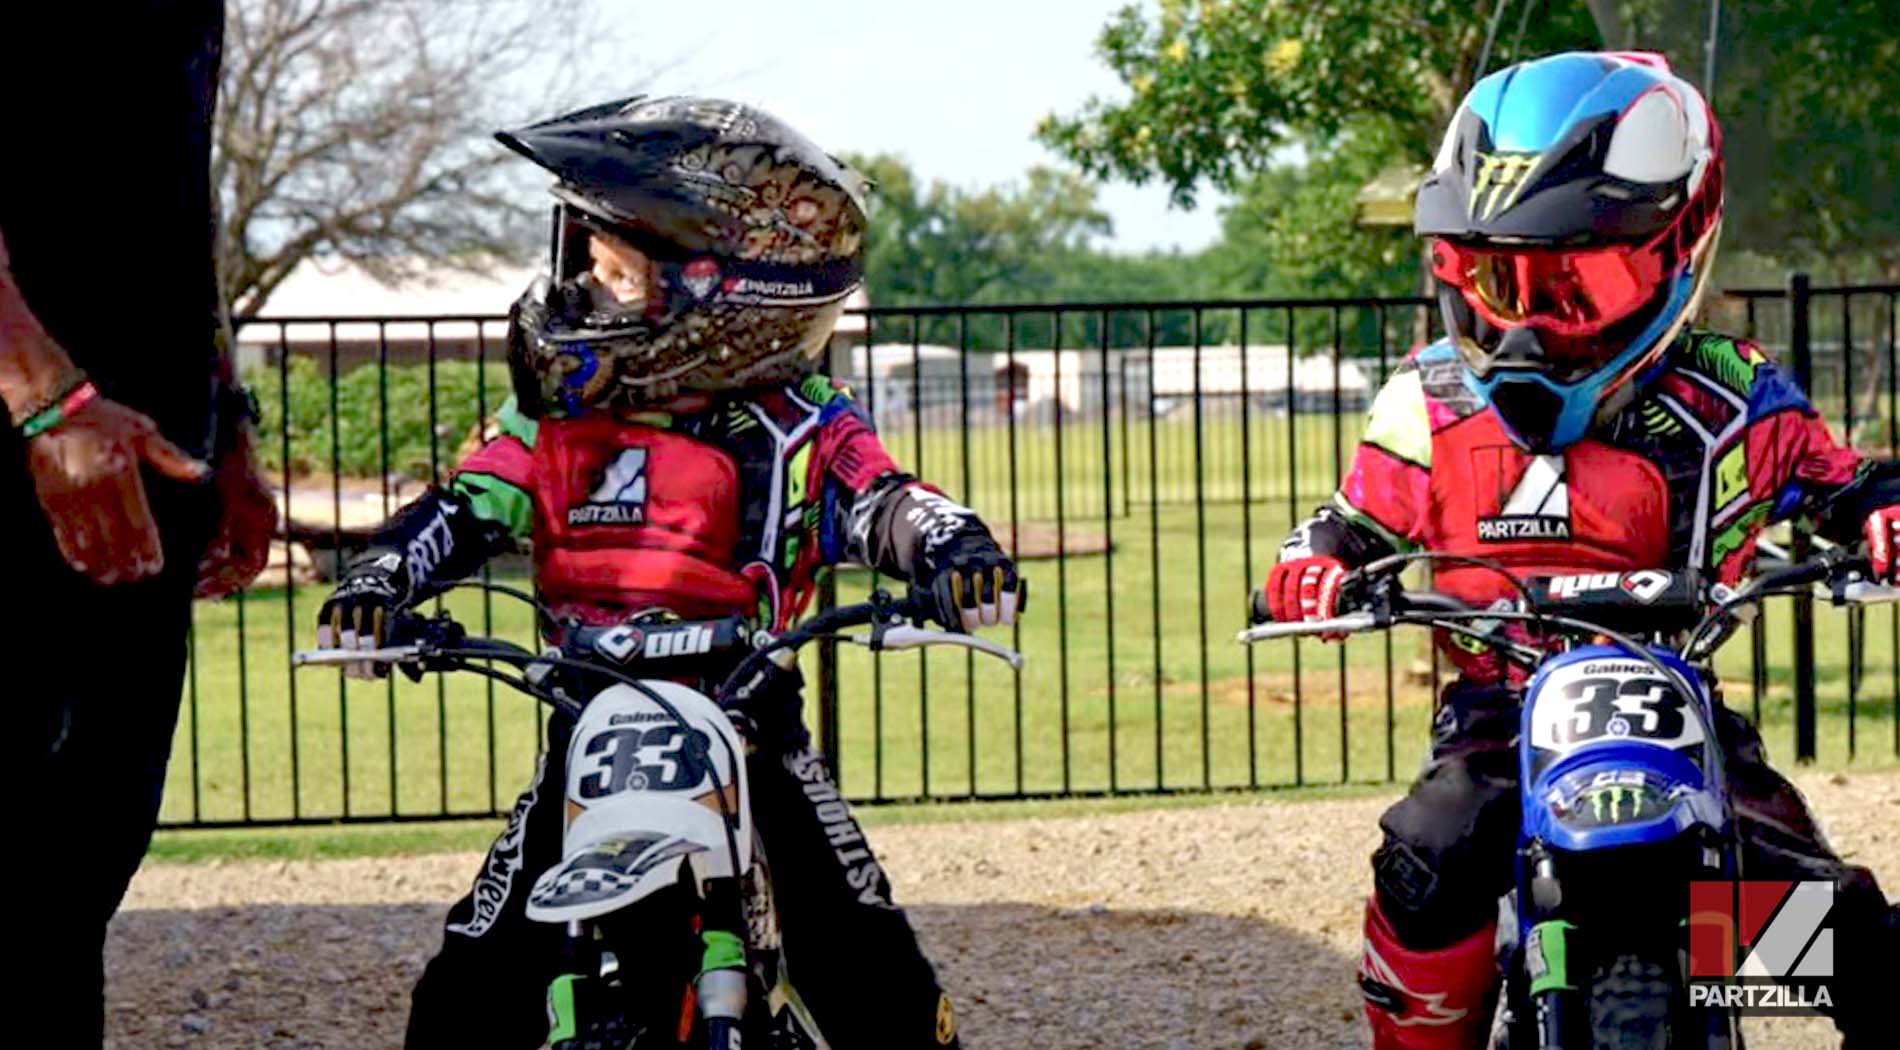 Professional stunt rider Ian Gaines children